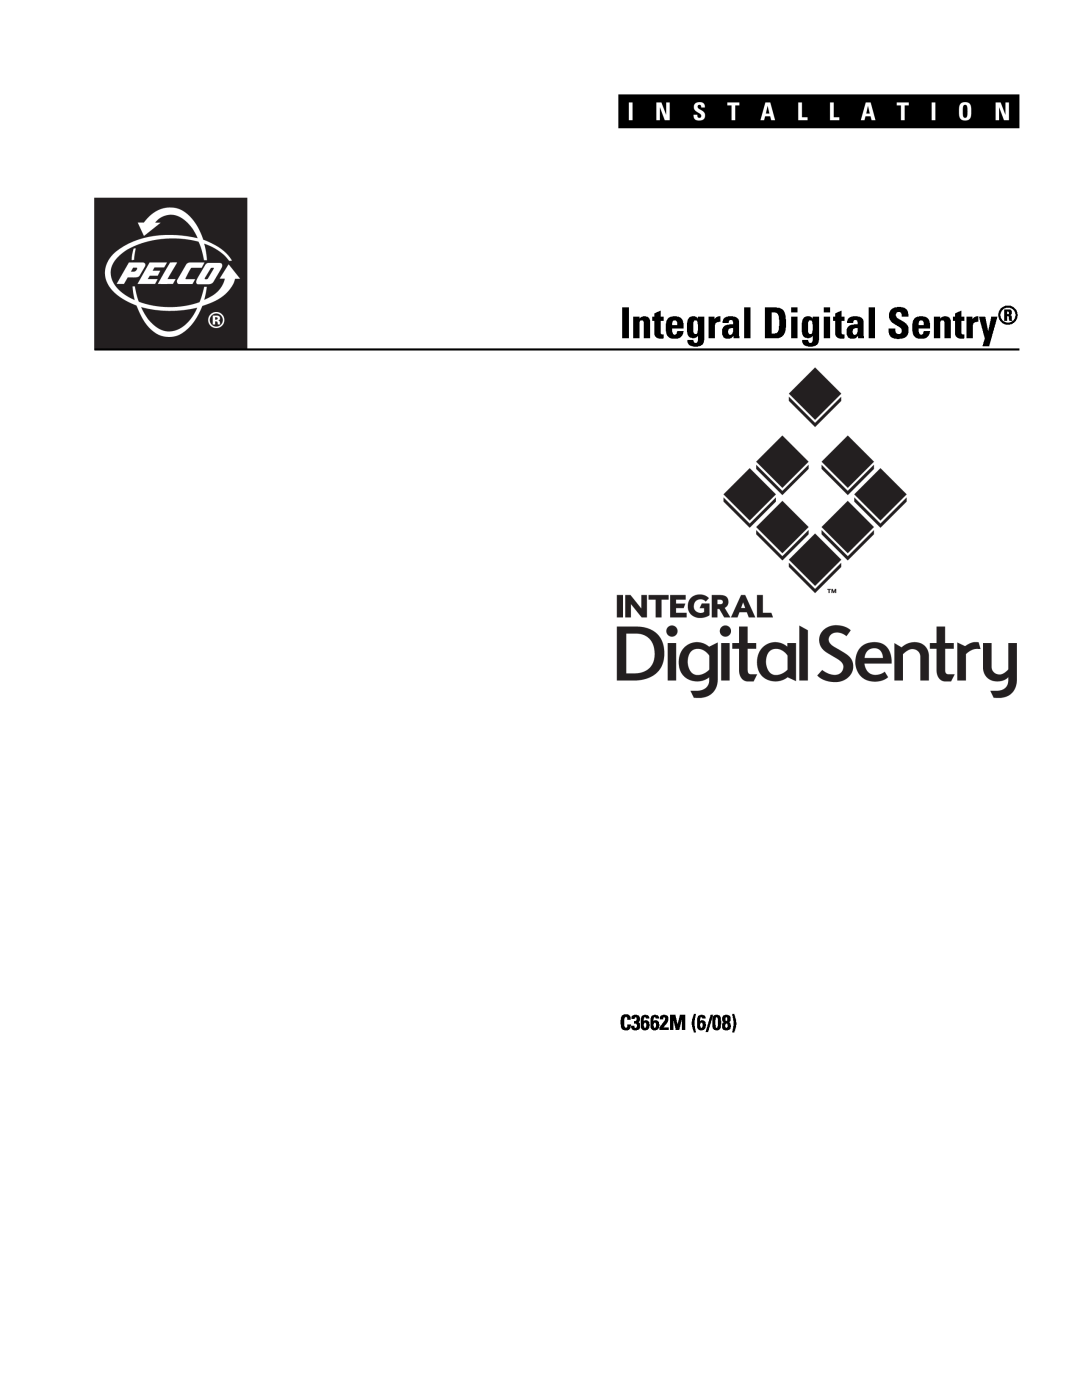 Pelco installation manual Integral Digital Sentry, I N S T A L L A T I O N, C3662M 6/08 